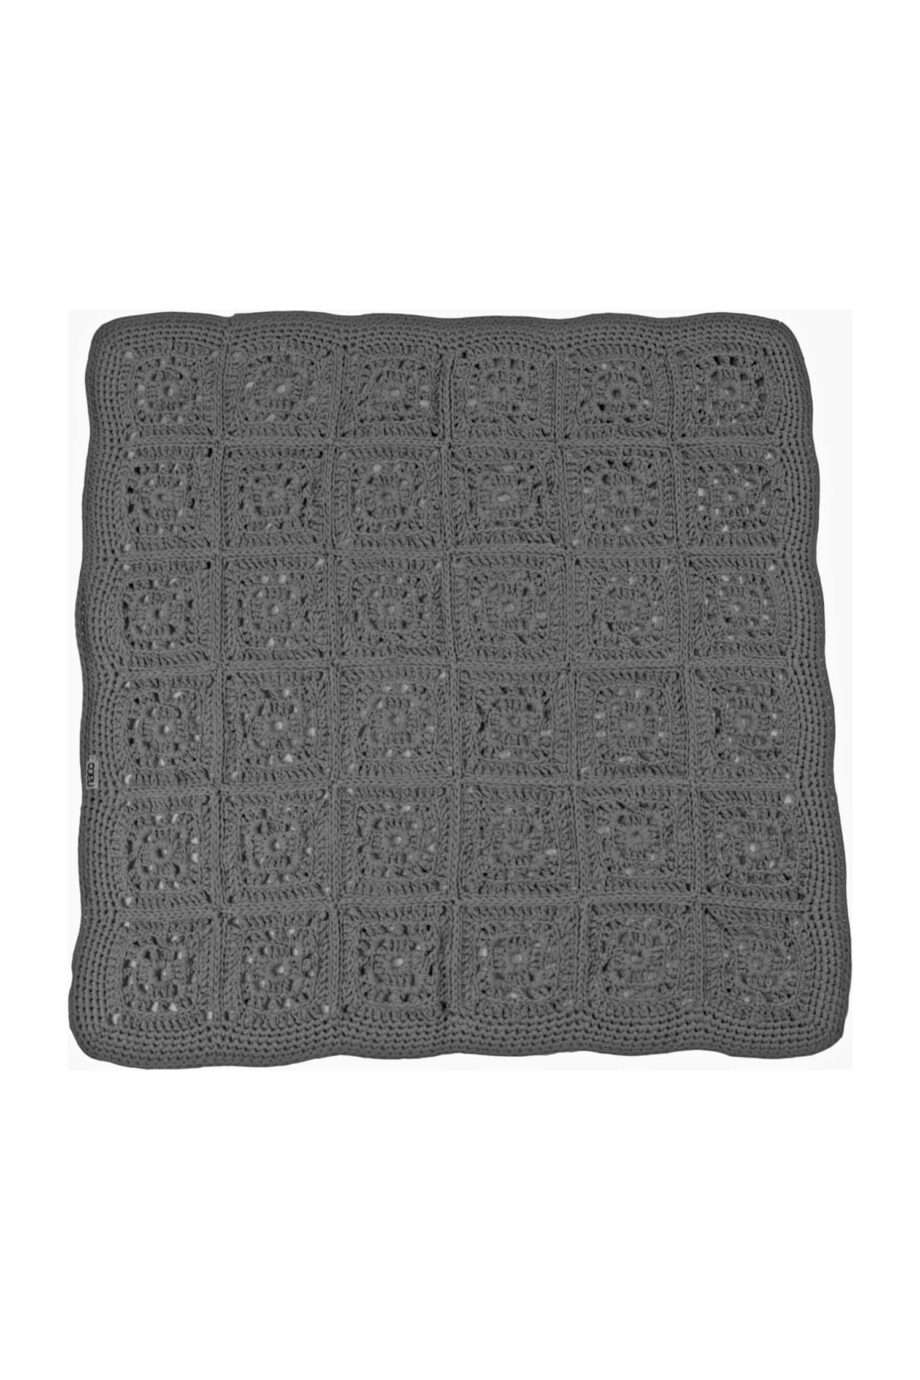 granny anthracite crochet cotton rug xlarge